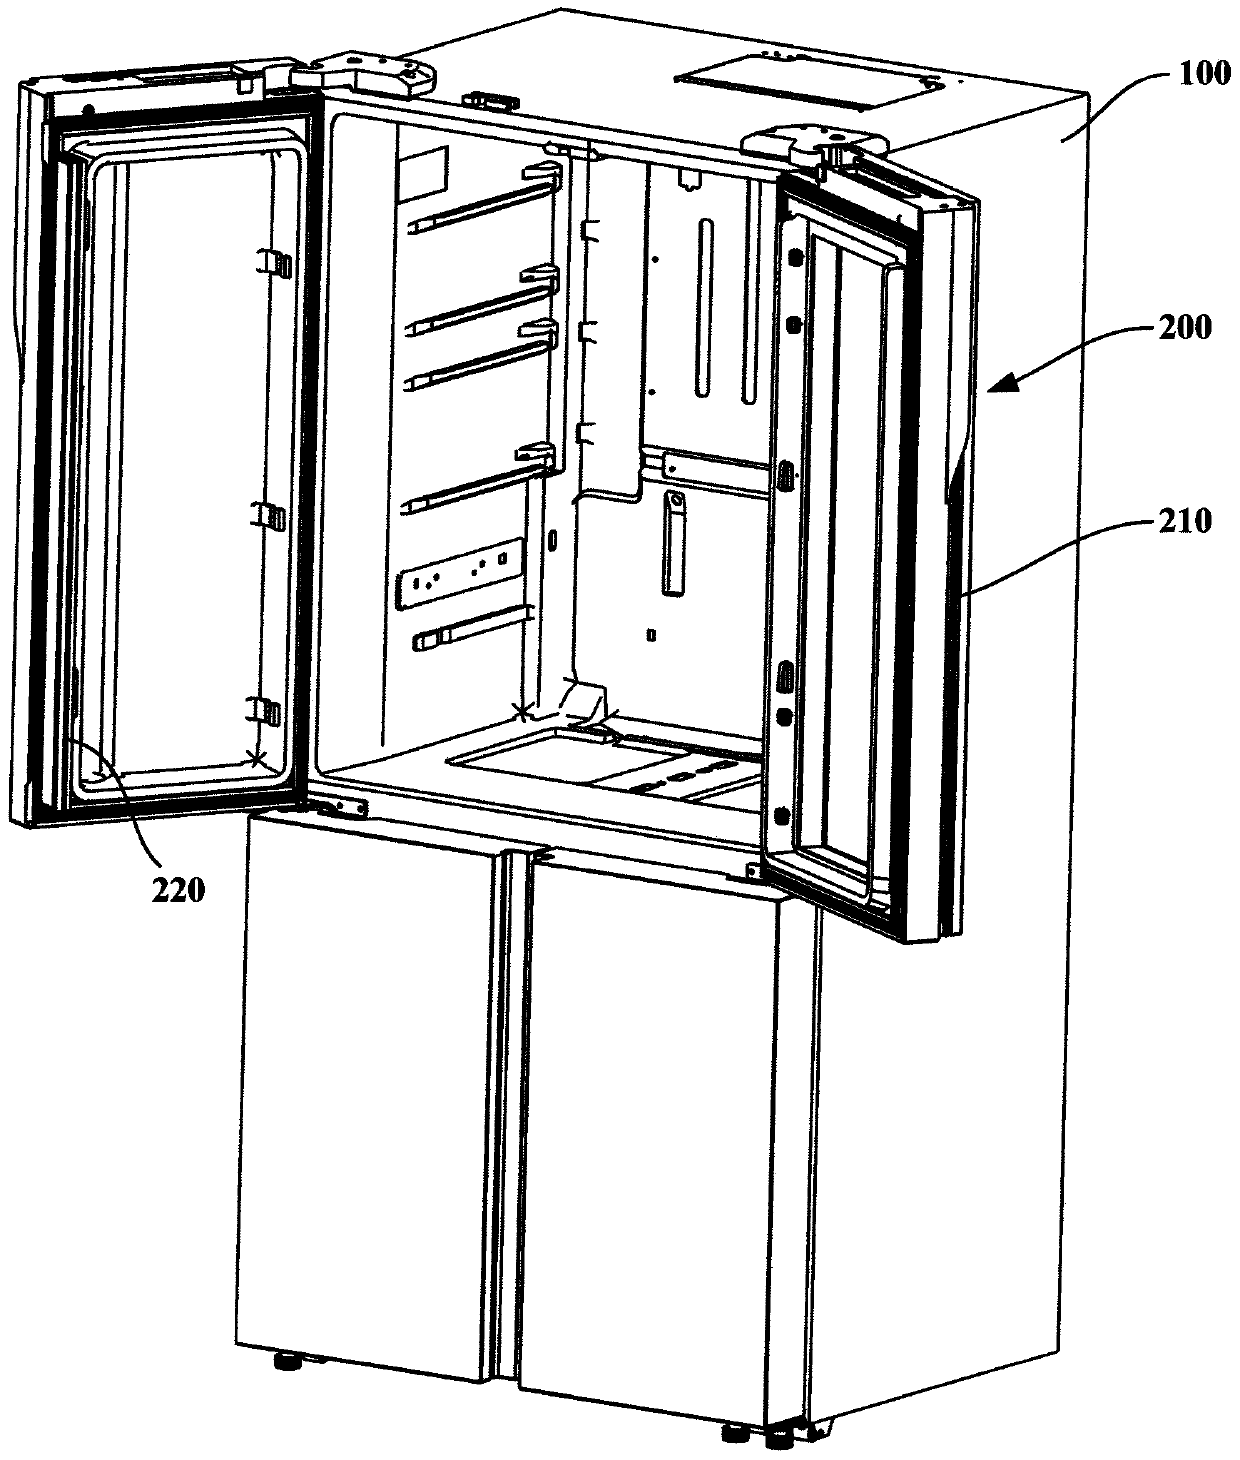 Double door refrigerator with camera